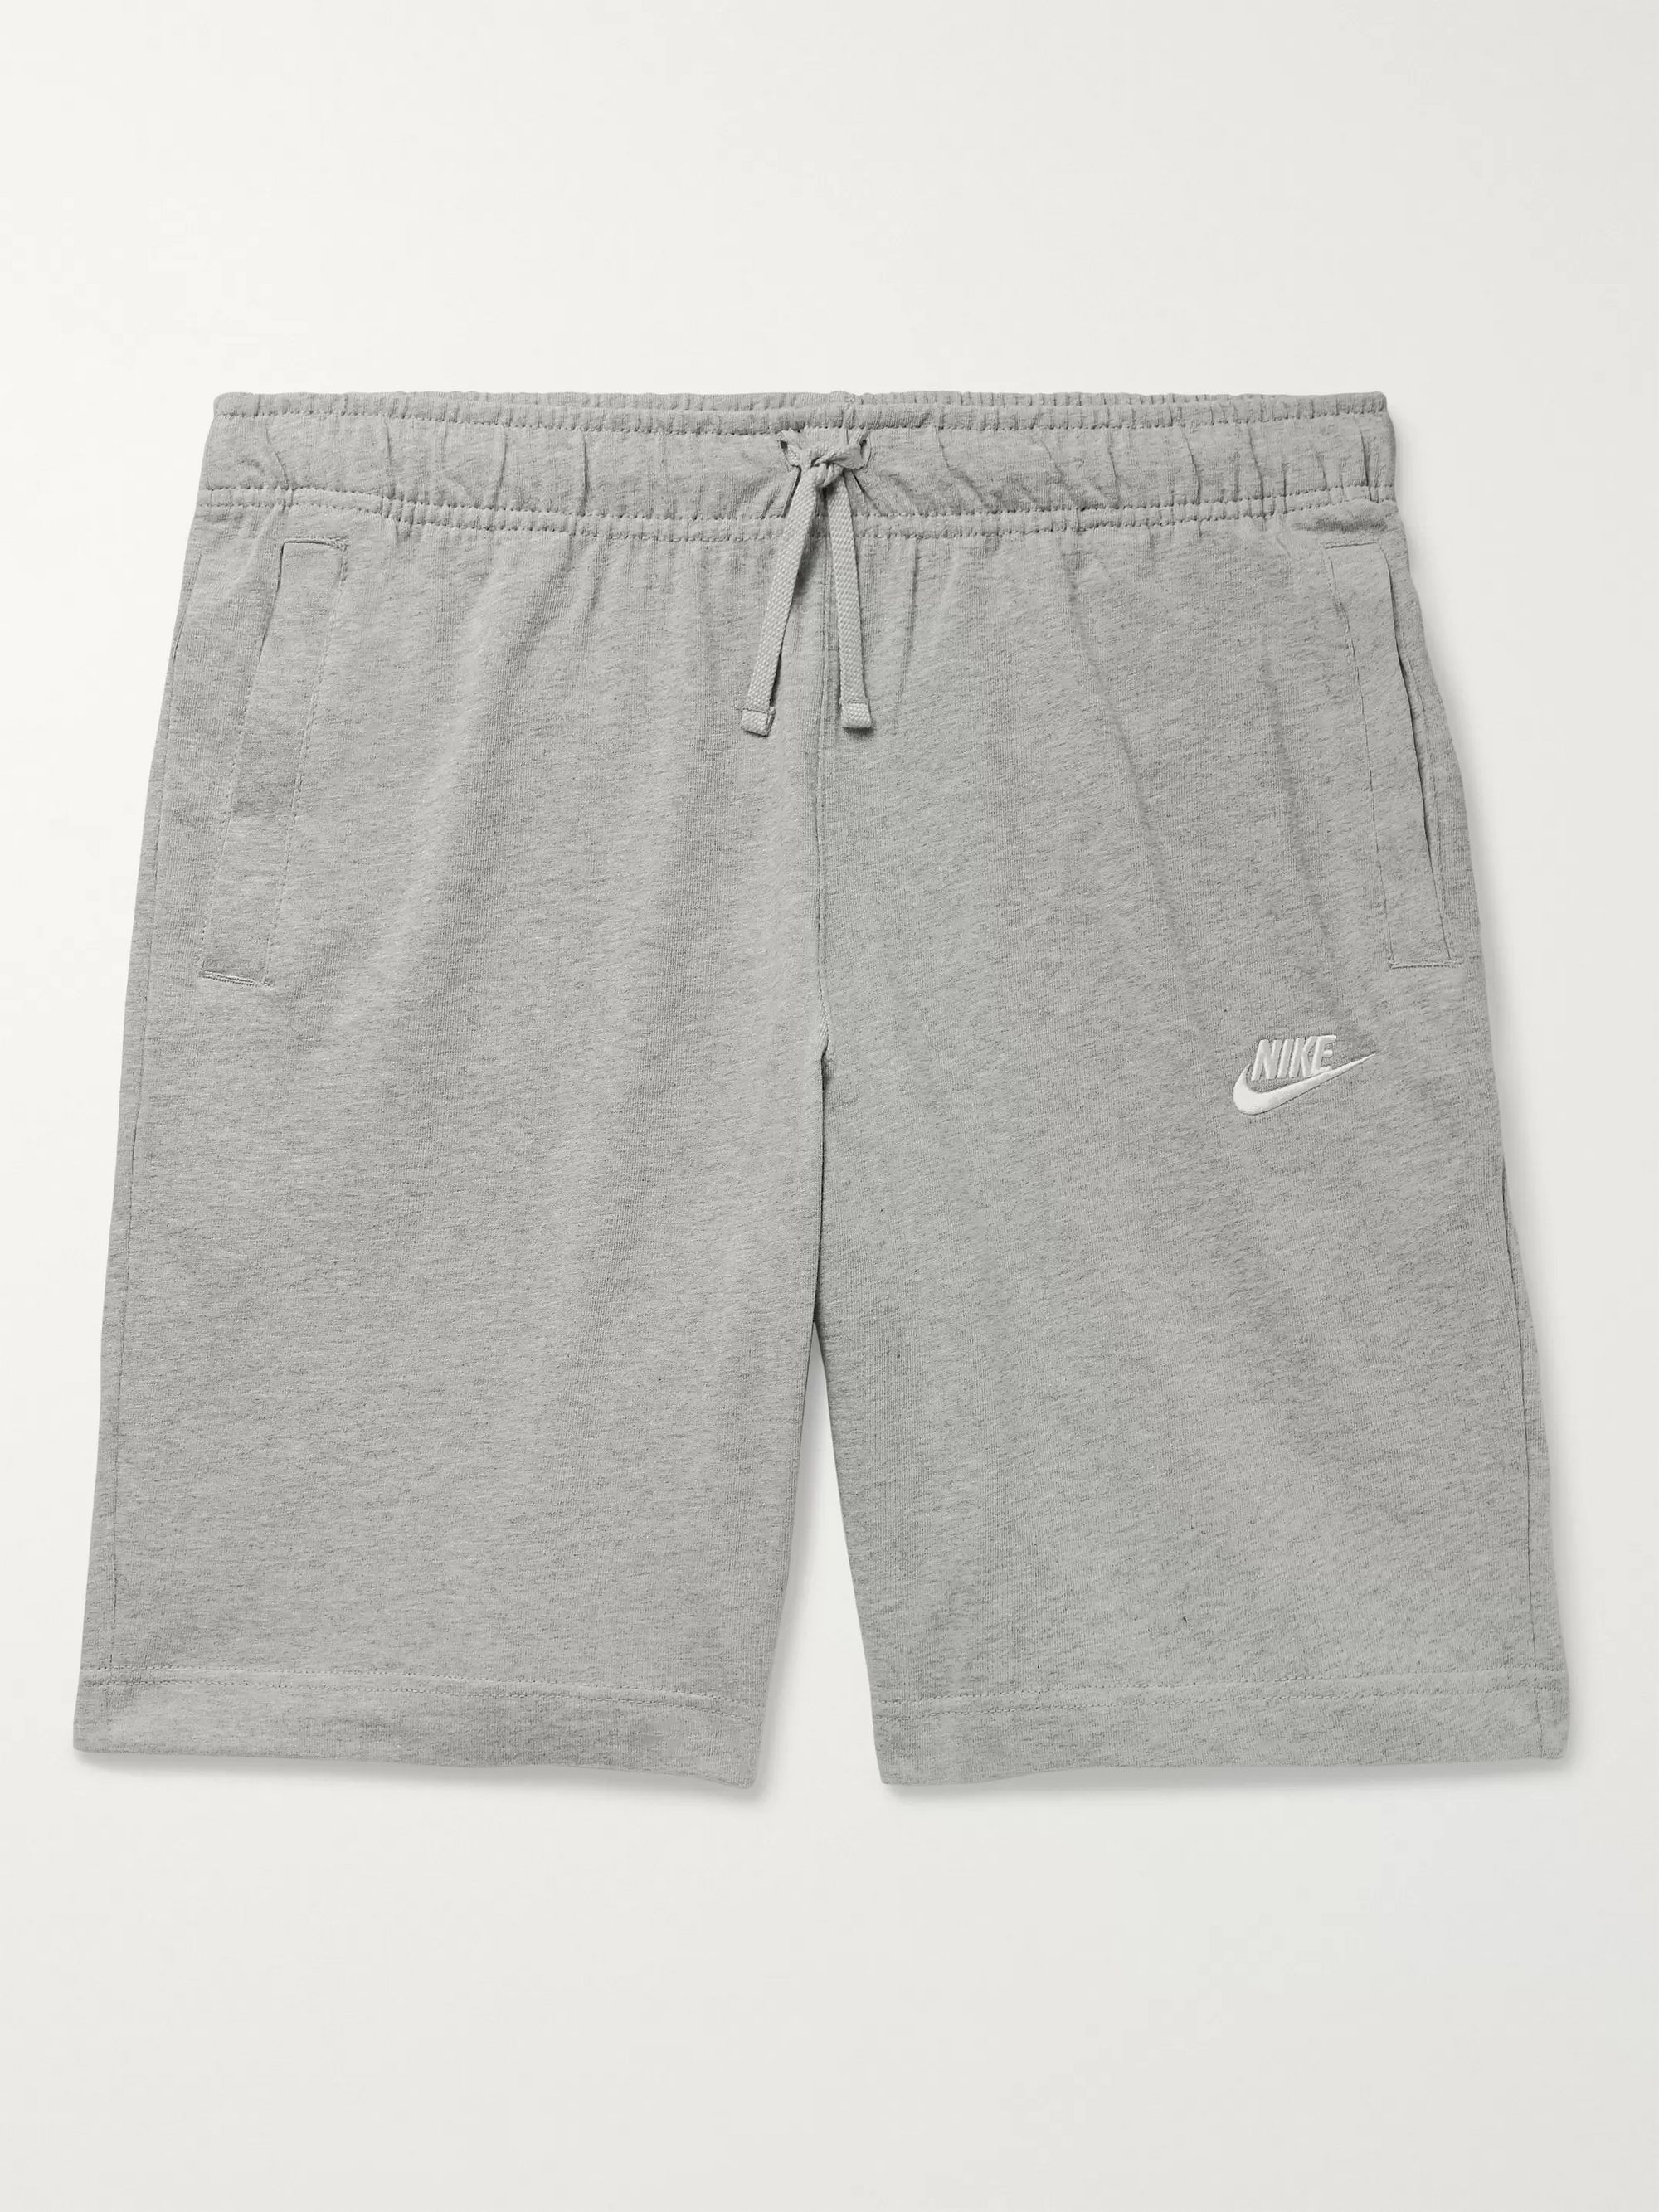 gray shorts nike cheap online